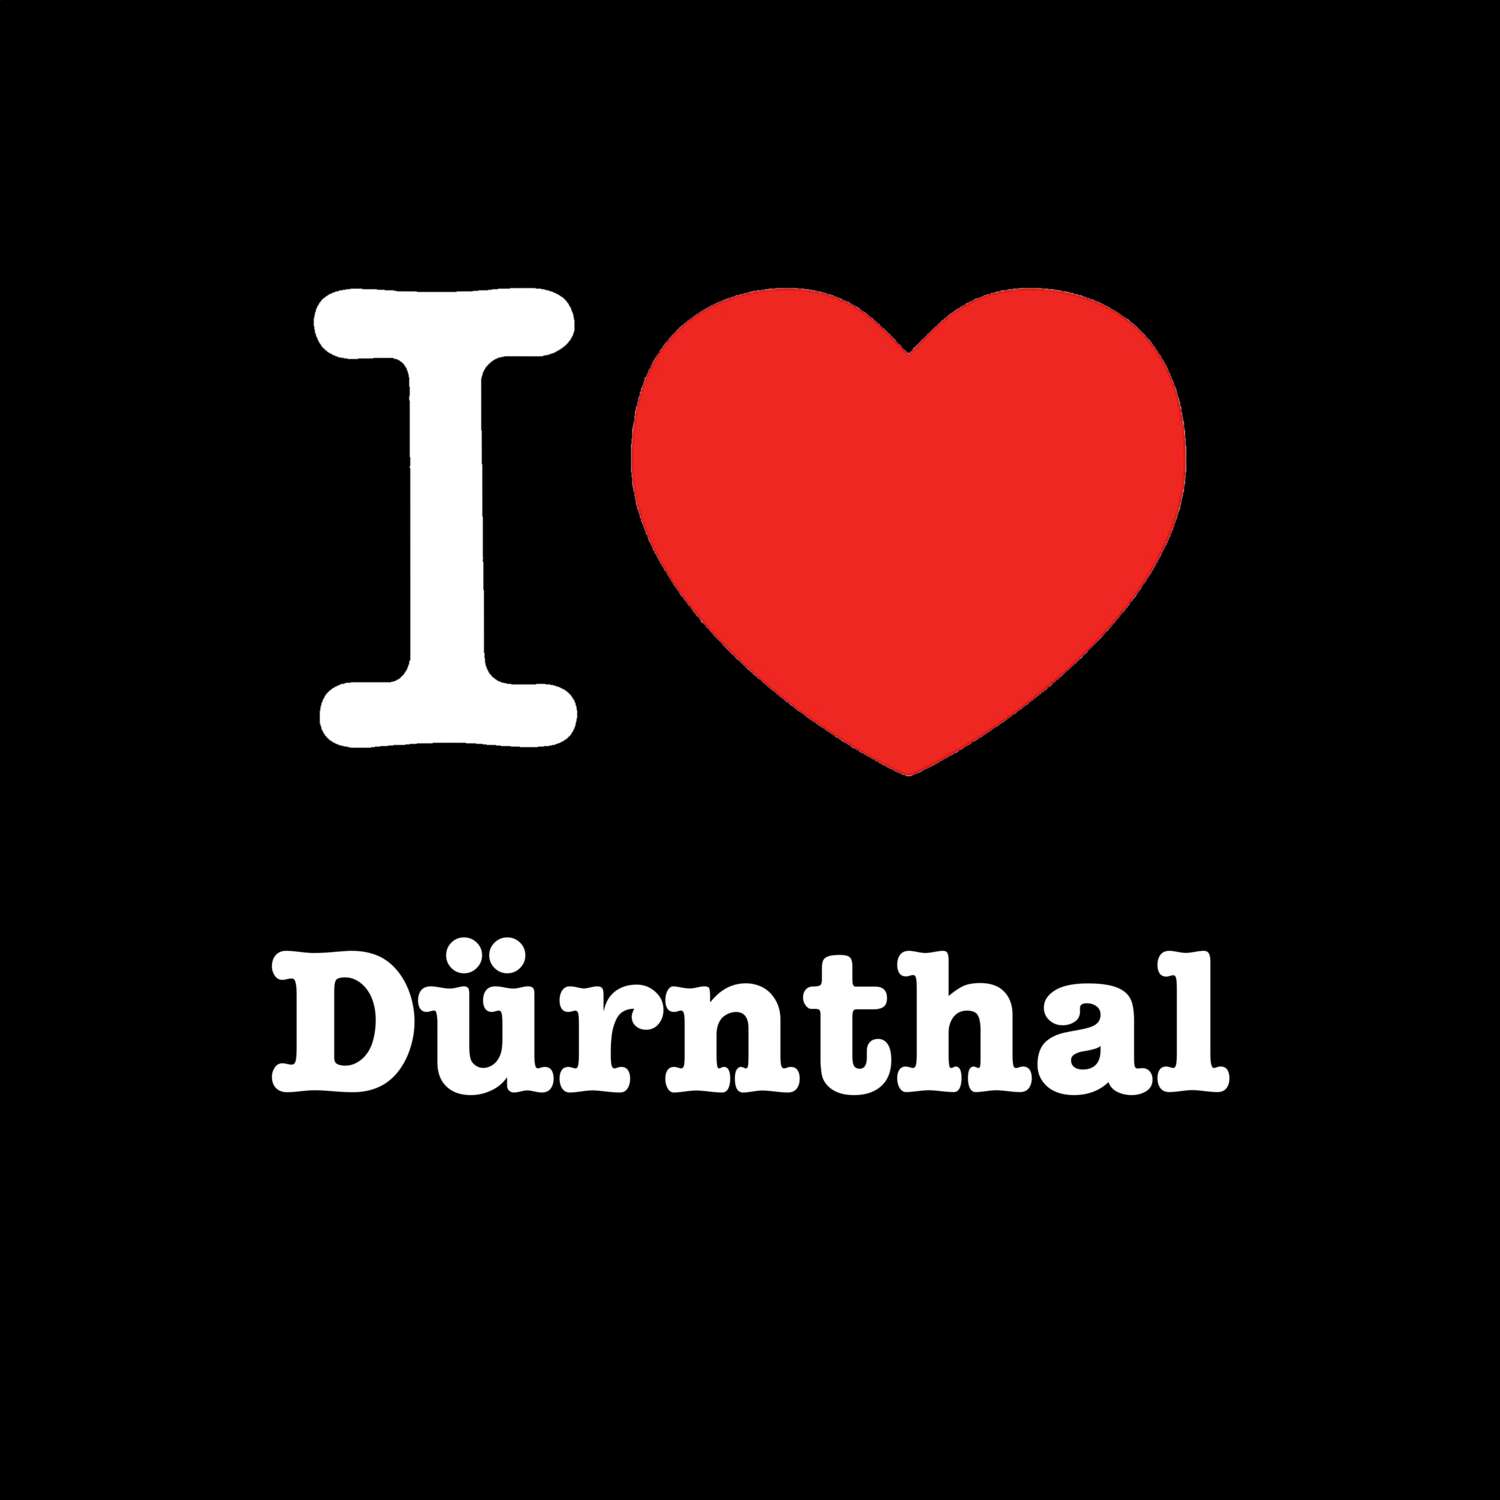 Dürnthal T-Shirt »I love«